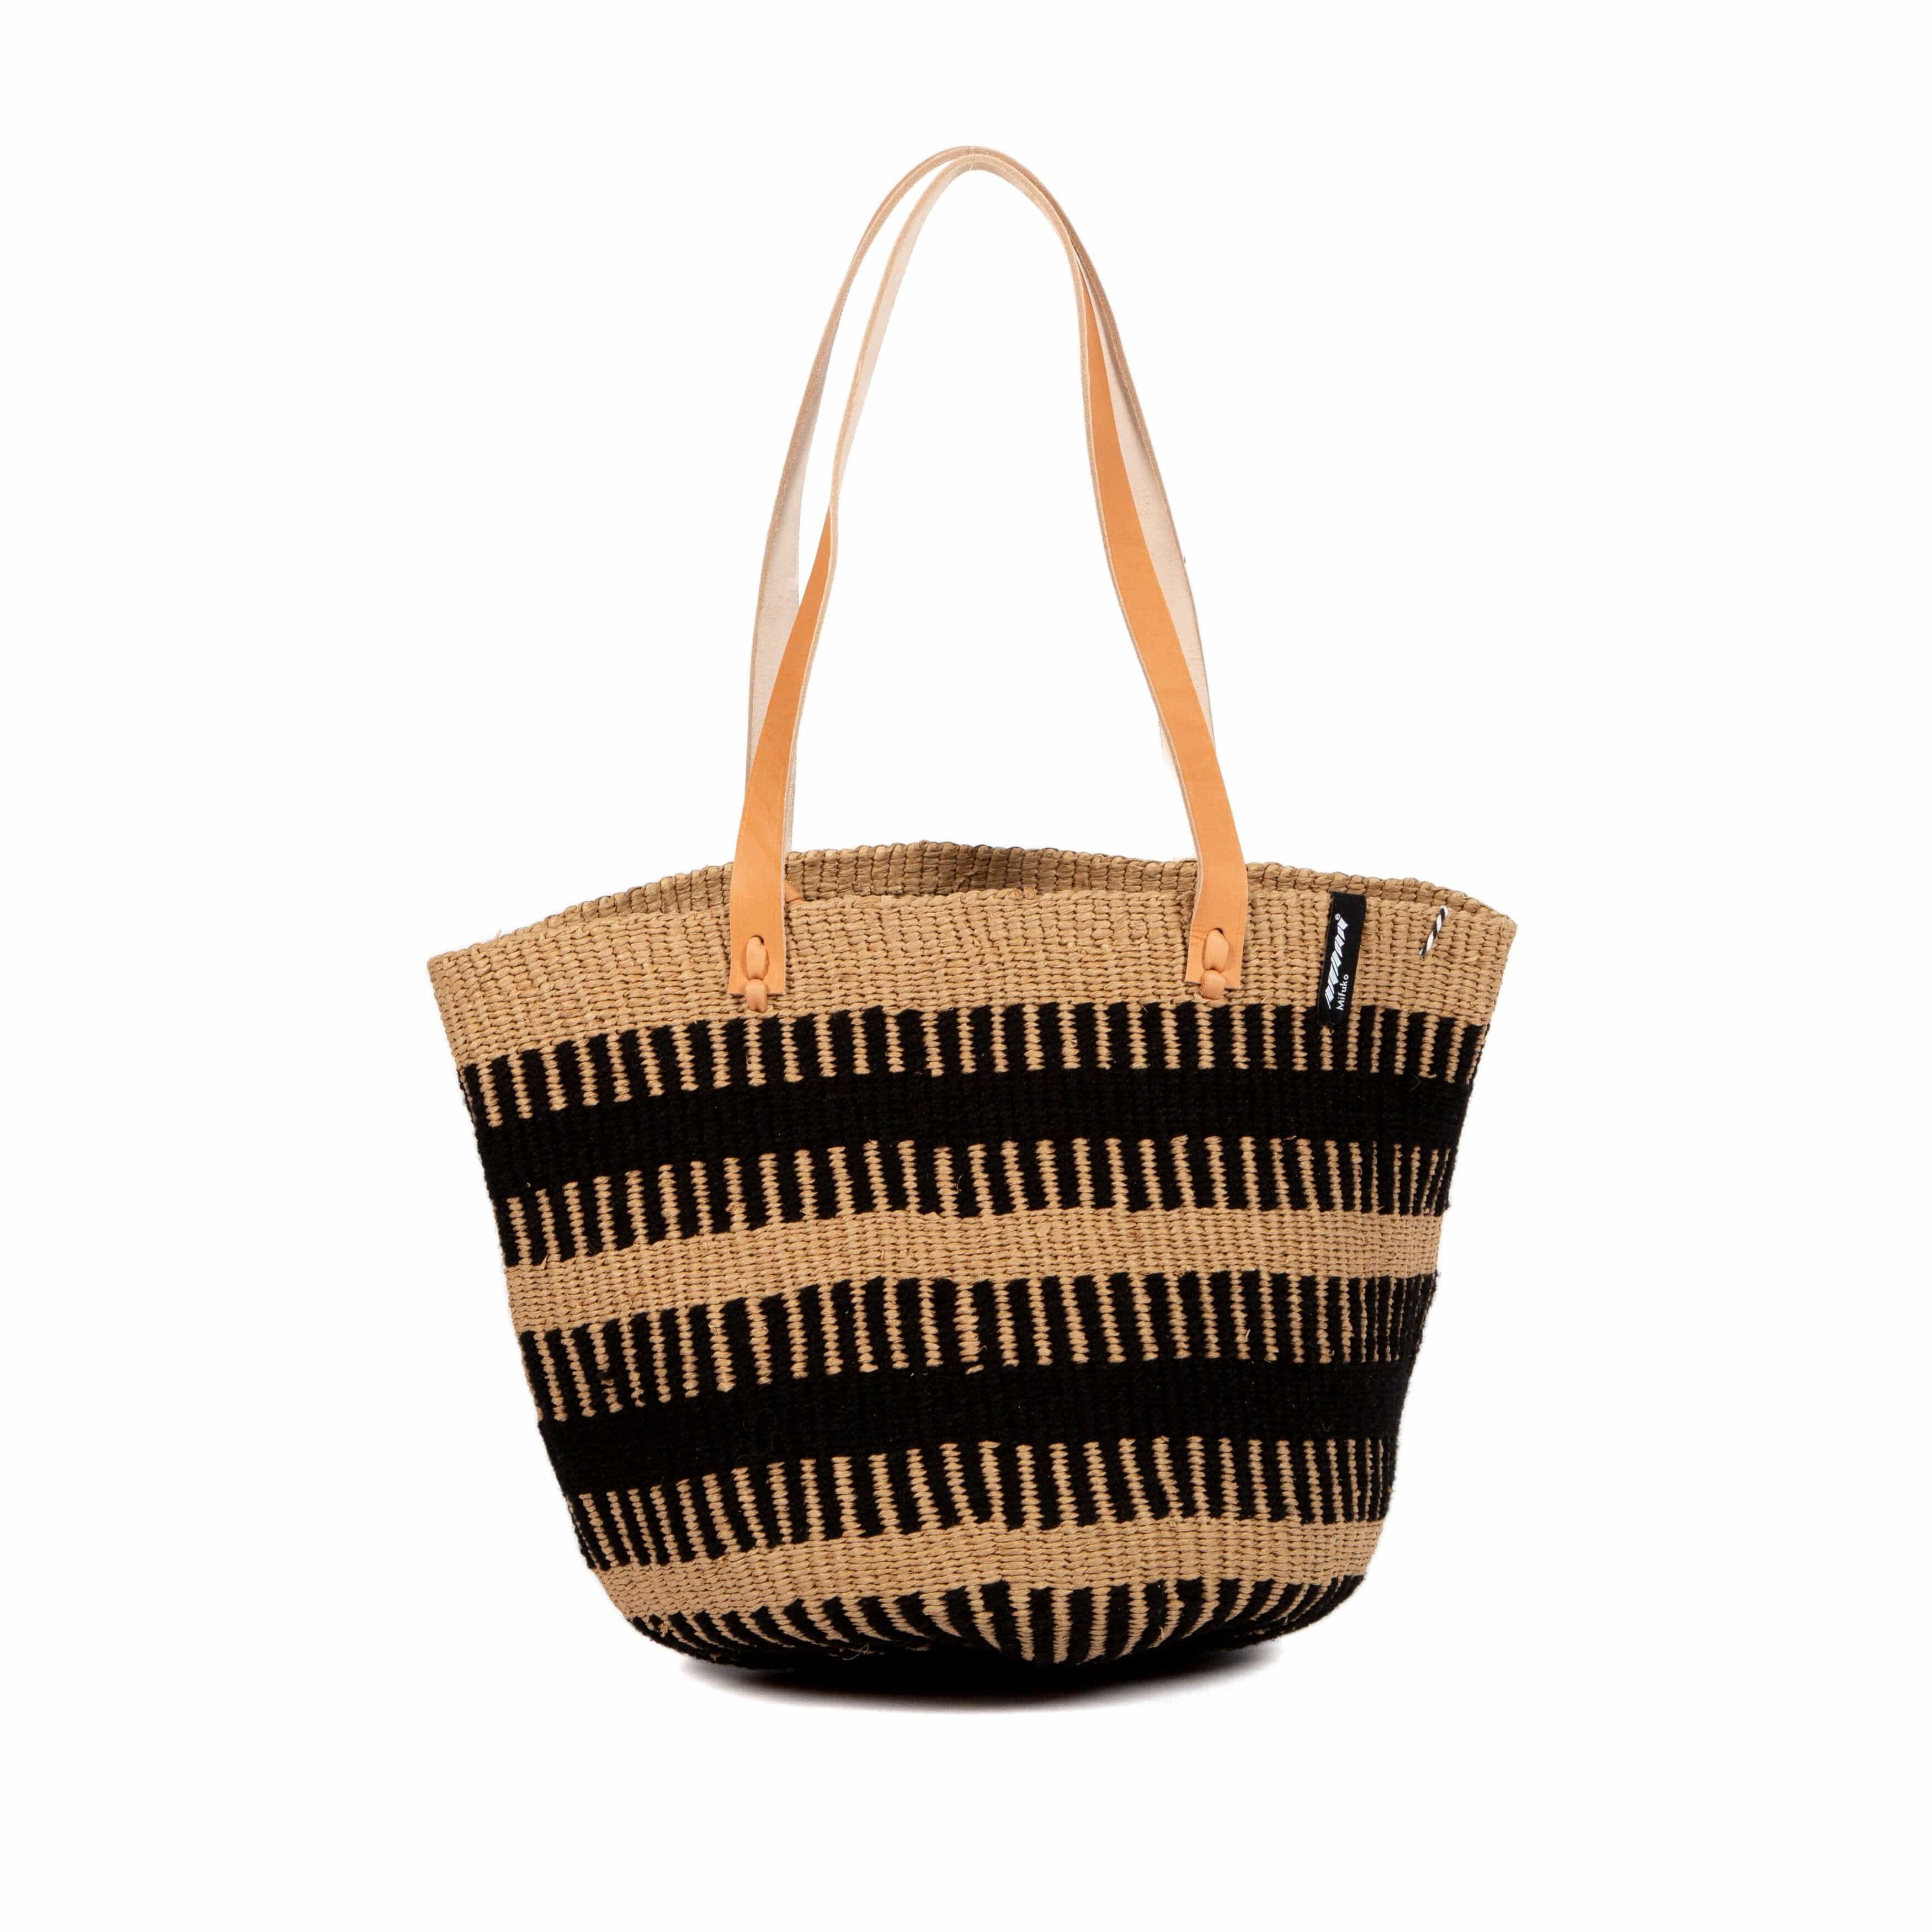 Mifuko Wool and paper Shopper basket Pamba shopper basket | Black rib weave M